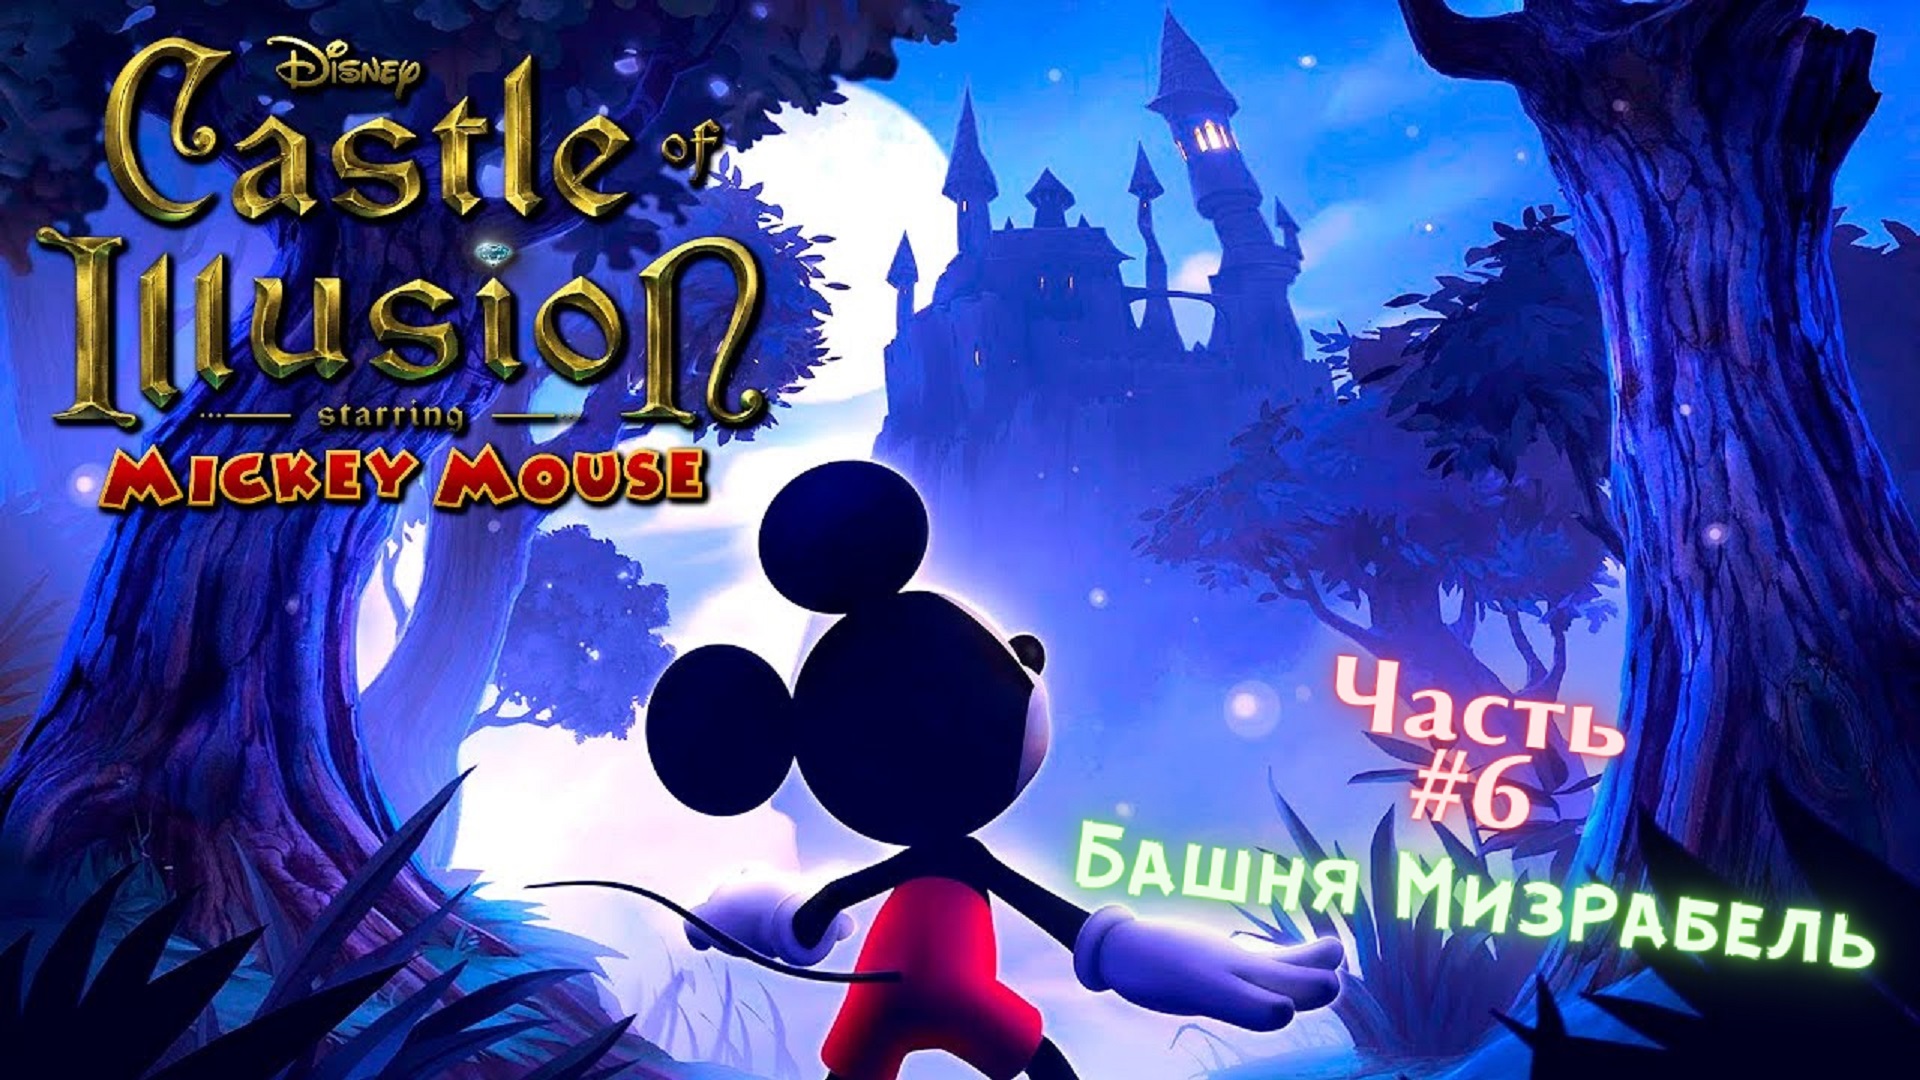 ?Castle of Illusion Starring Micky Mouse?Башня Мизрабель?Прохождение на Русском языке #6 Финал